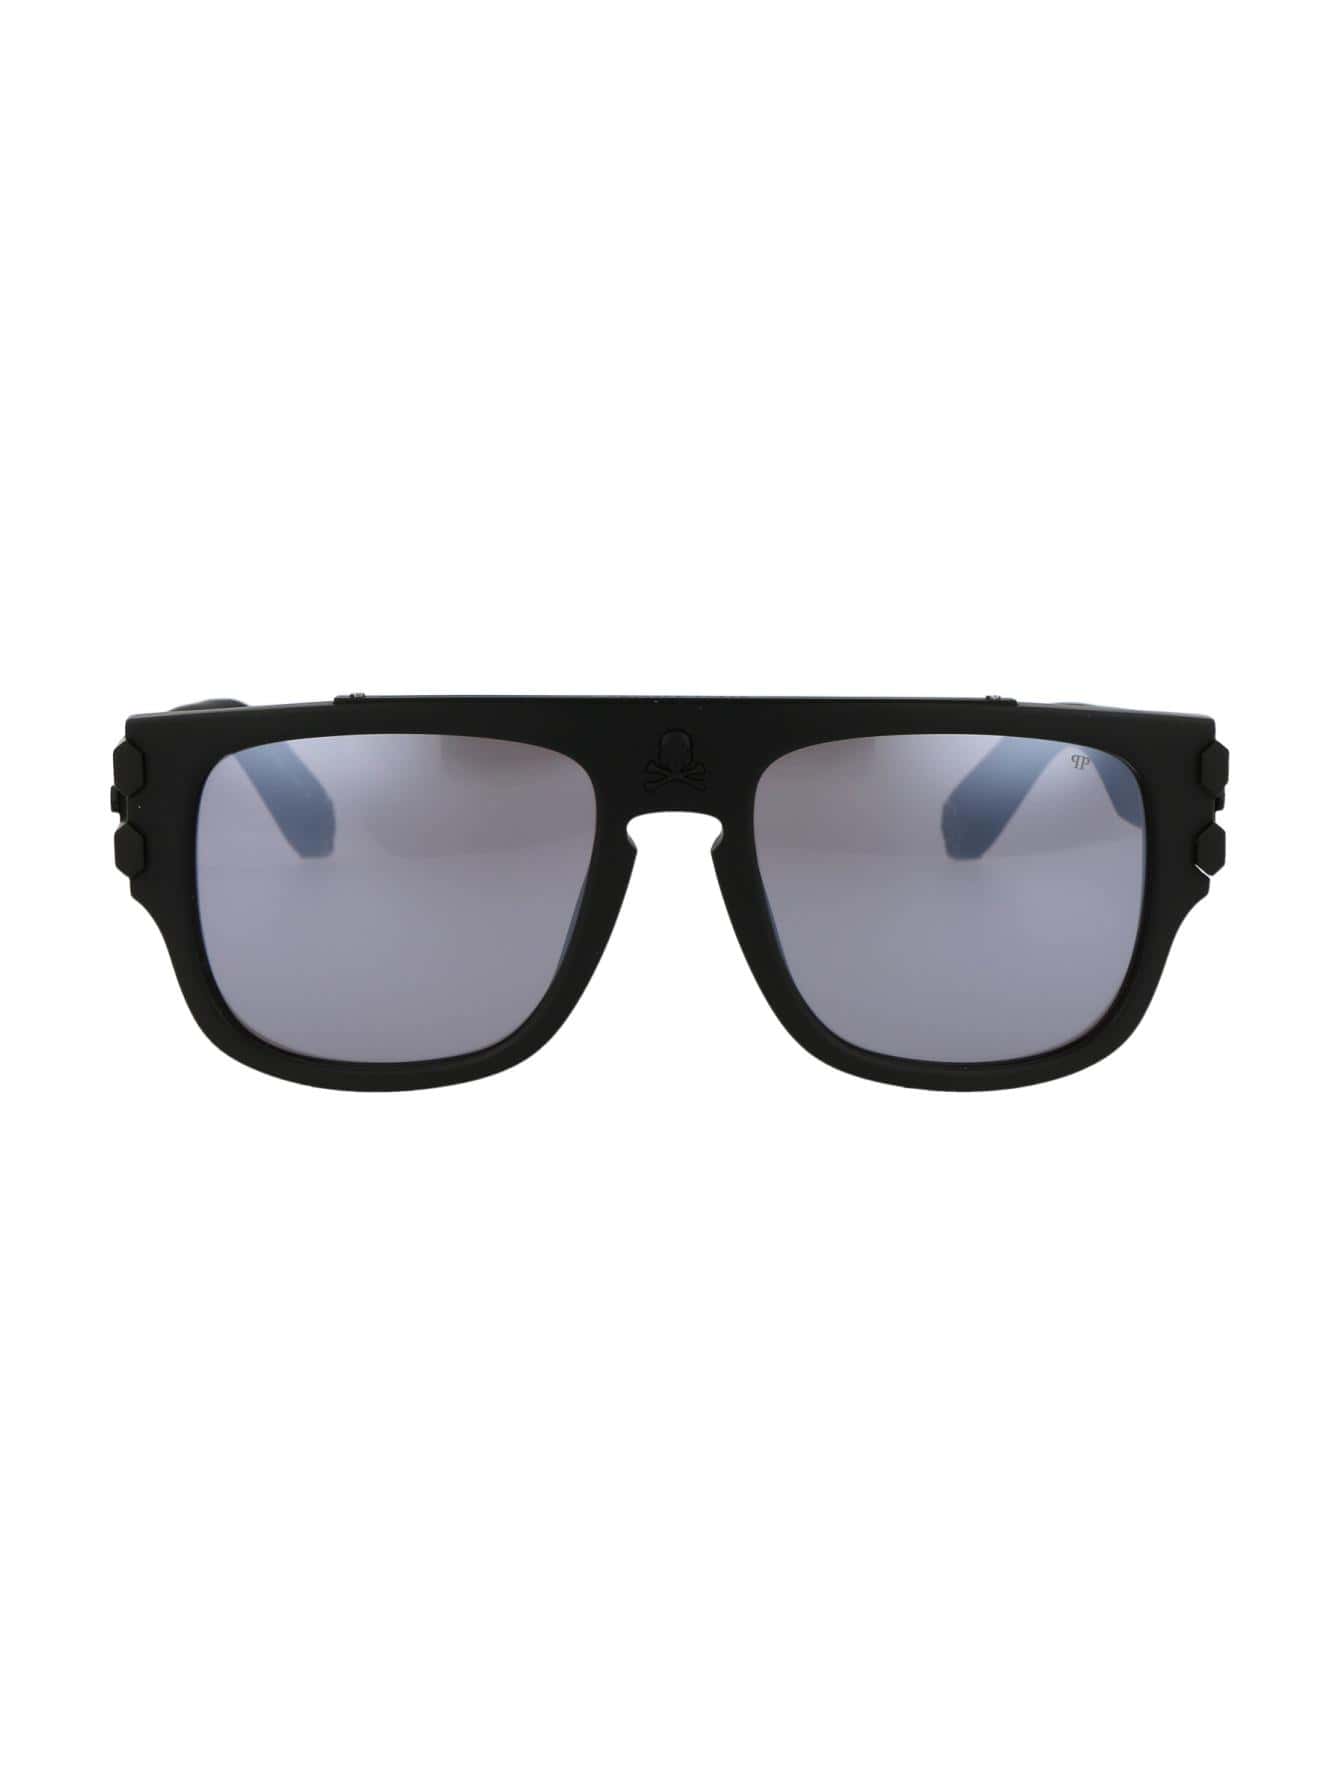 Мужские солнцезащитные очки Philipp Plein DECOR SPP011W703M, многоцветный philipp plein солнцезащитные очки philipp plein 043m 9mb [philipp plein 043m 9mb]